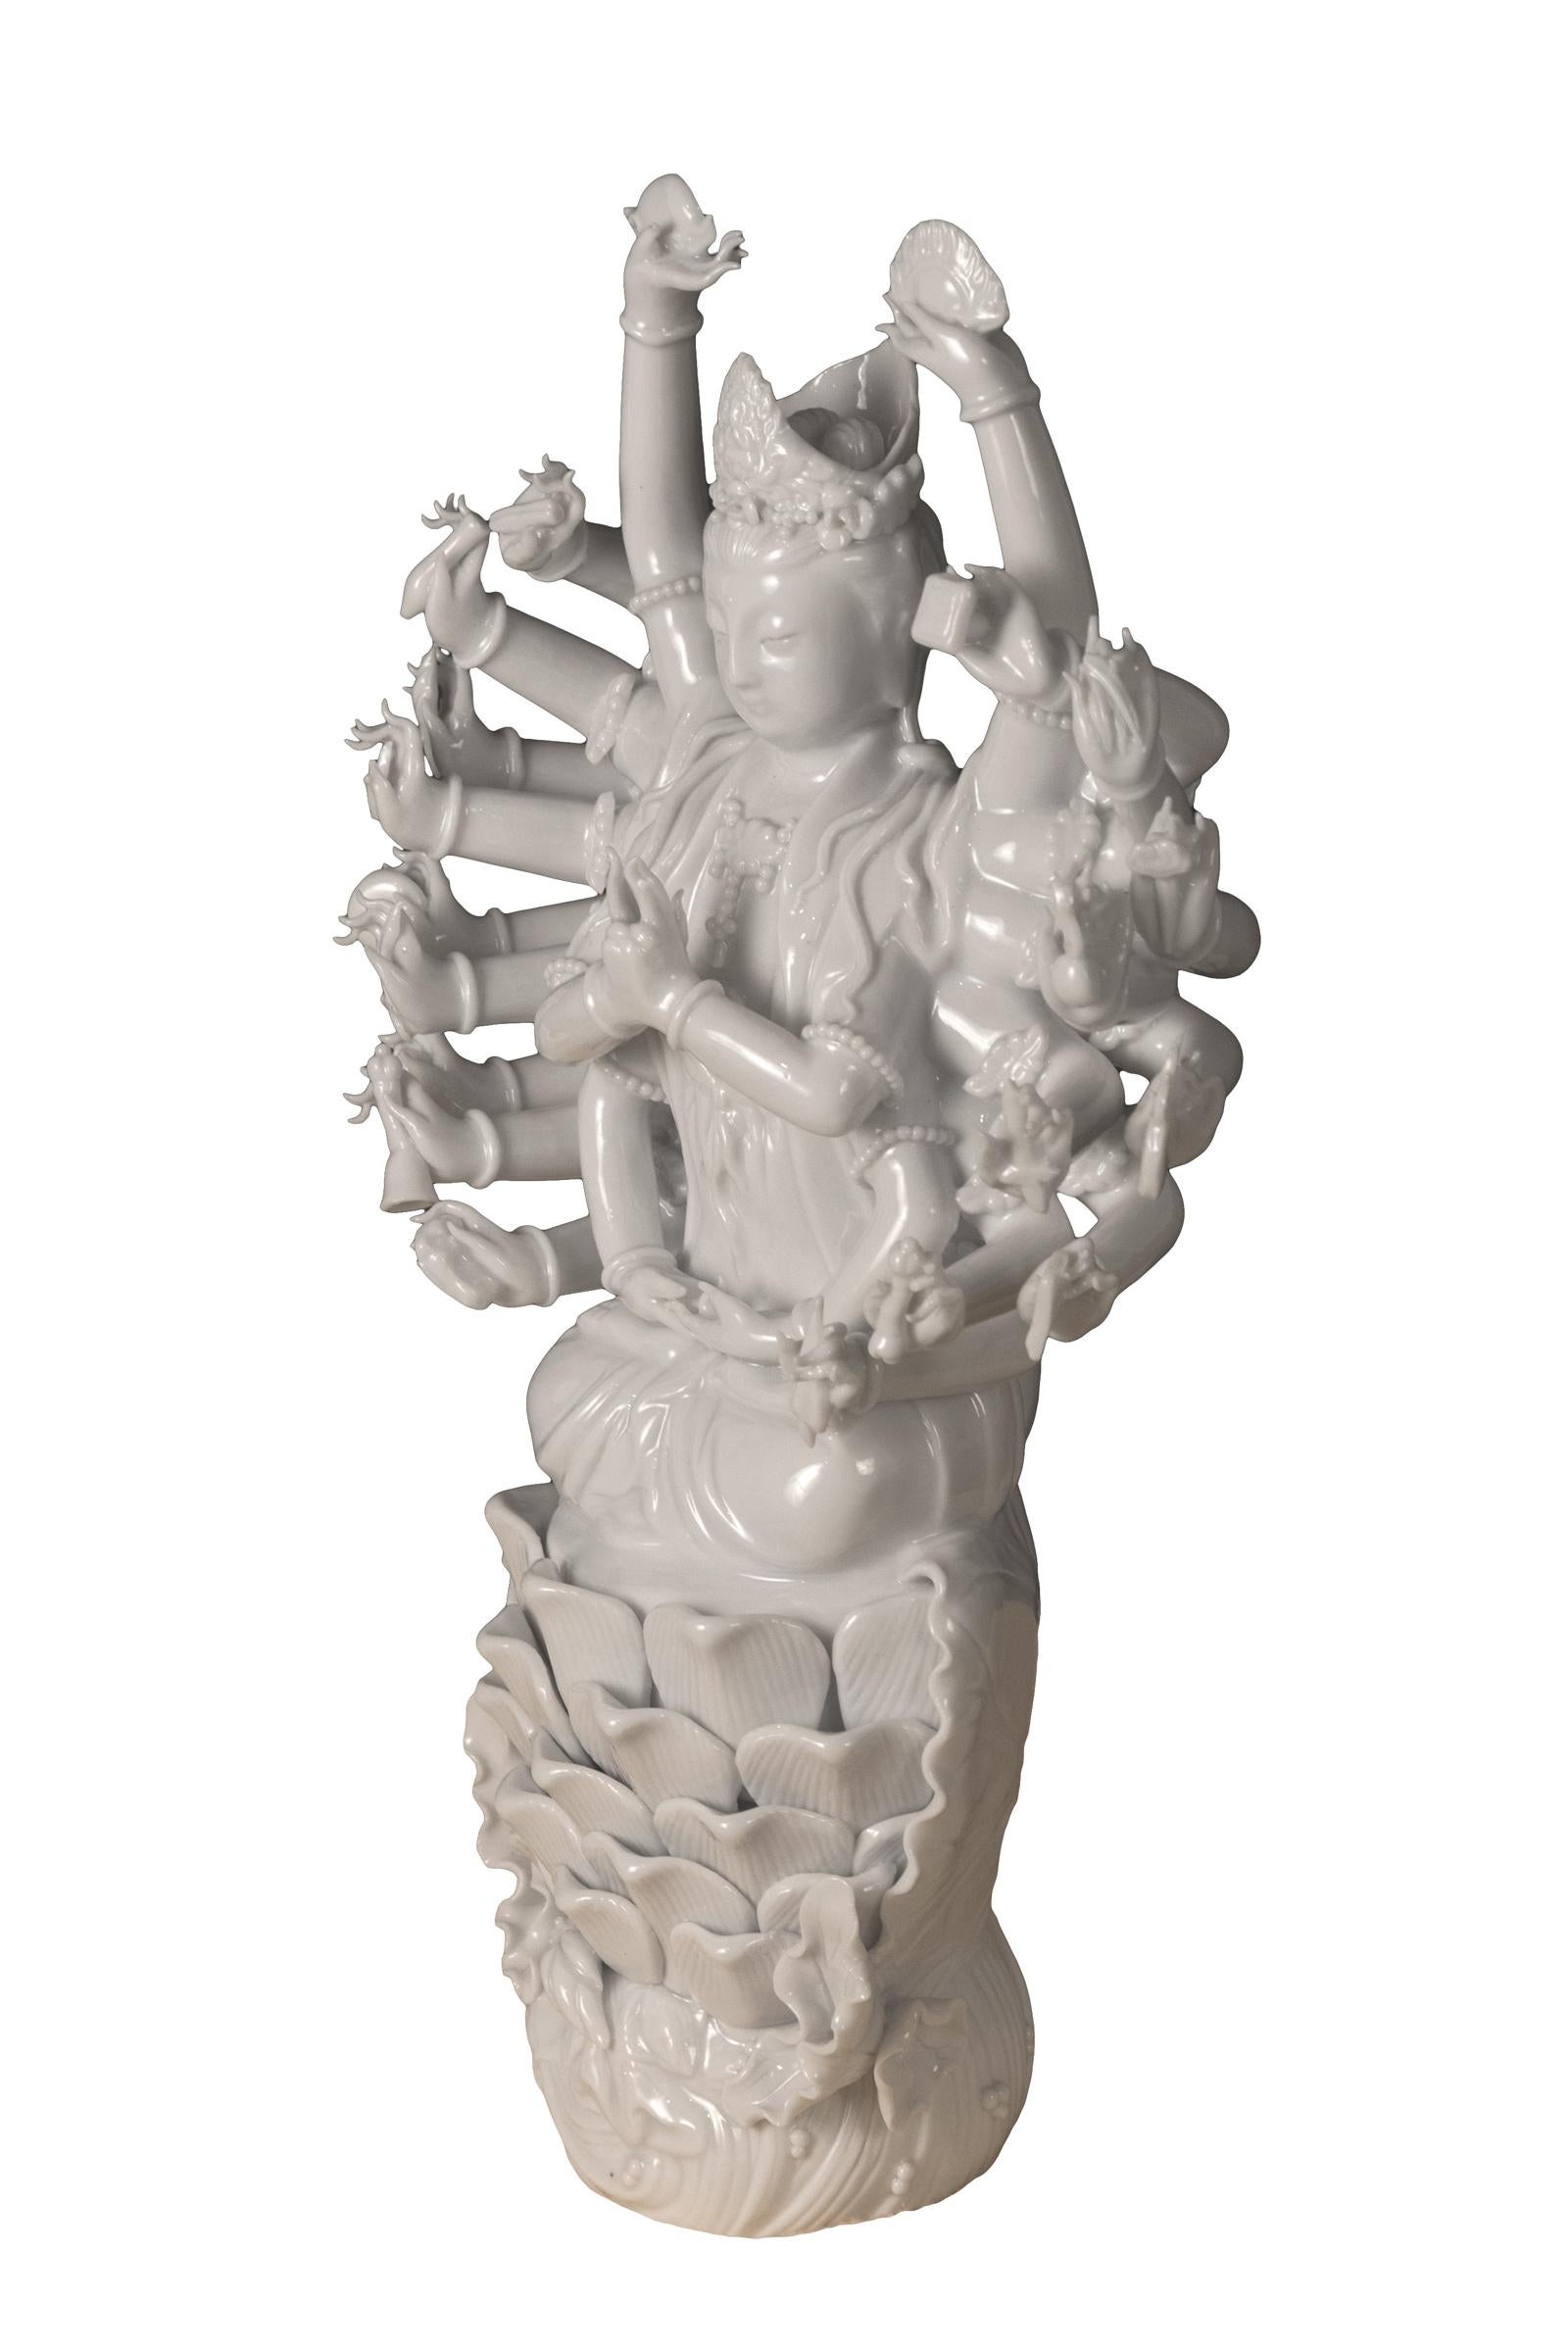 Blanc de chine (Dehua) porcelain figure of Guanyin with her thousand hands, (circa 1980).

China

Measures: 12 x 7.5 x 3.75.